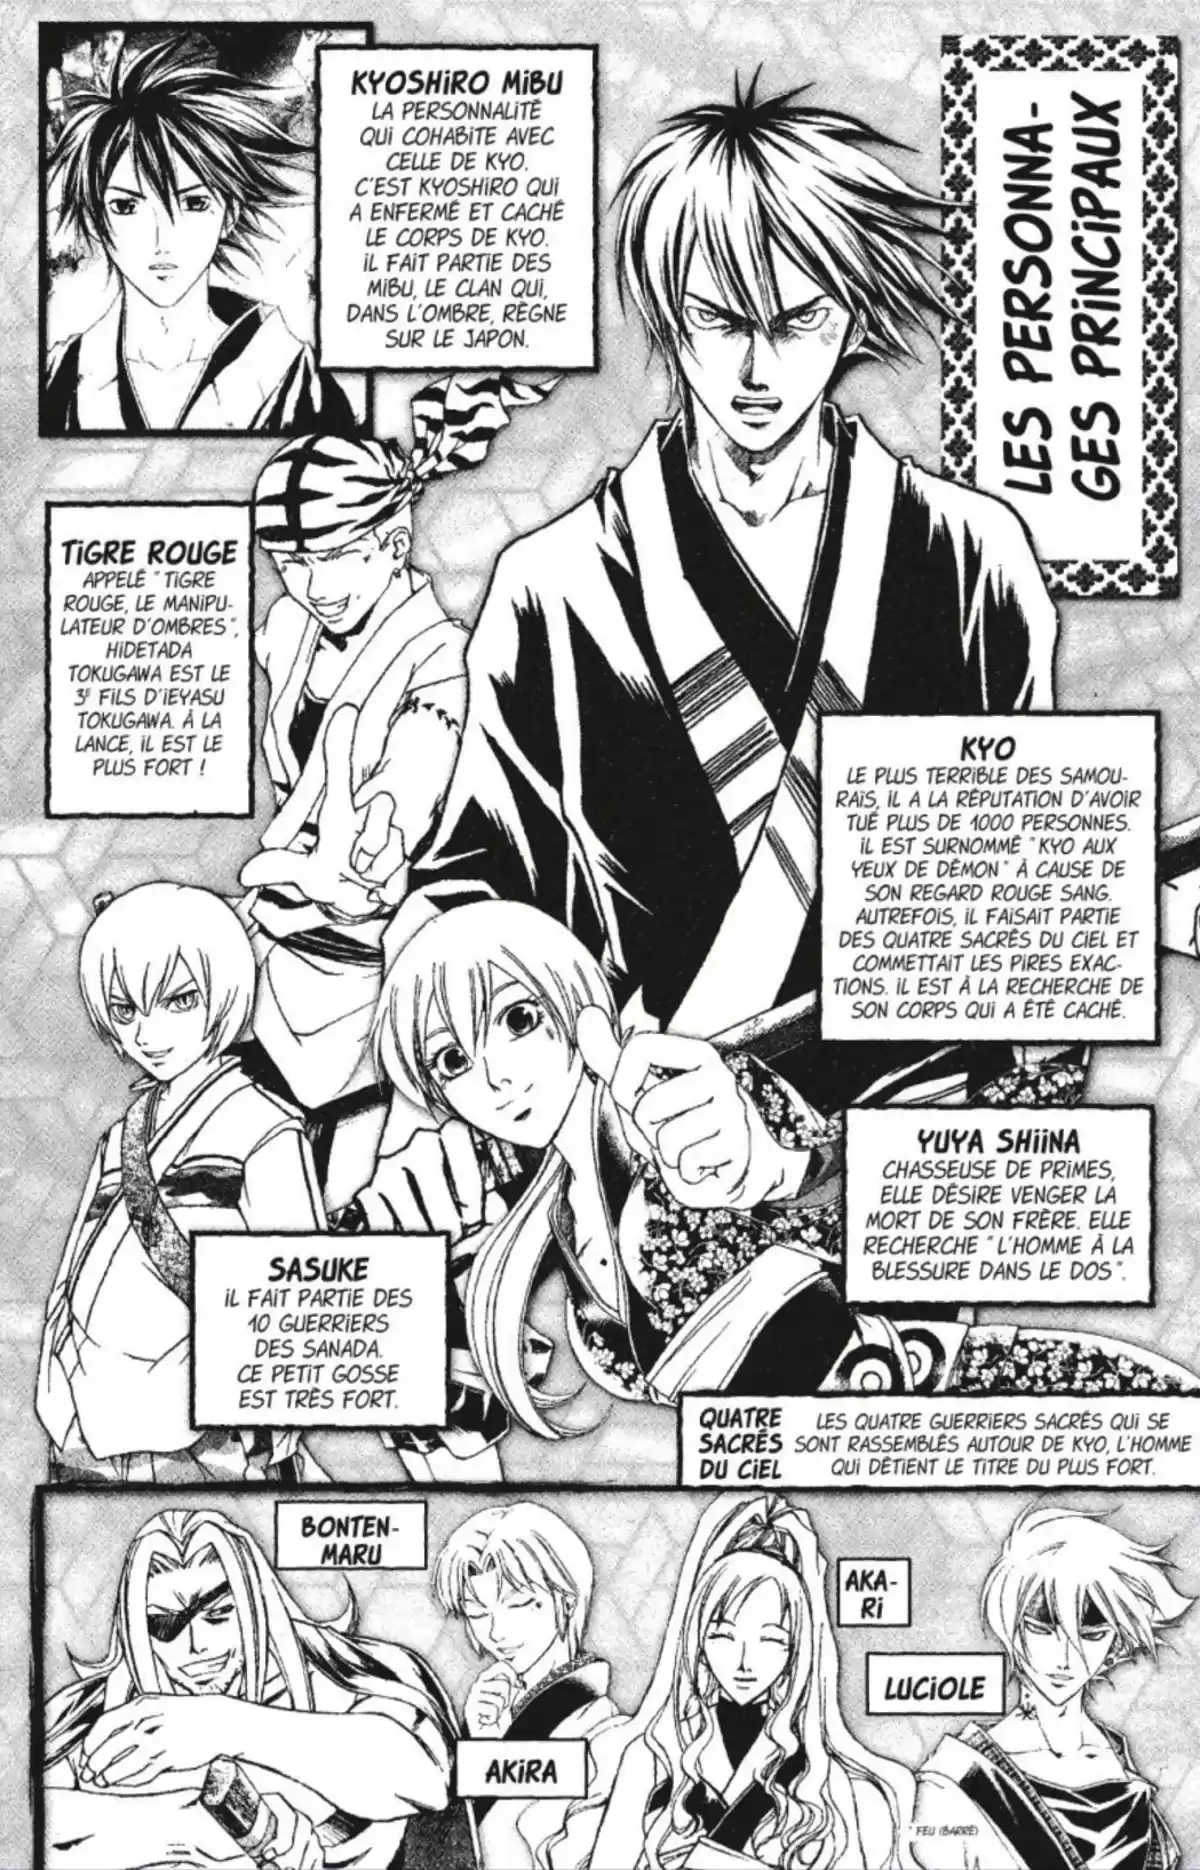 Samurai Deeper Kyo Volume 23 page 3